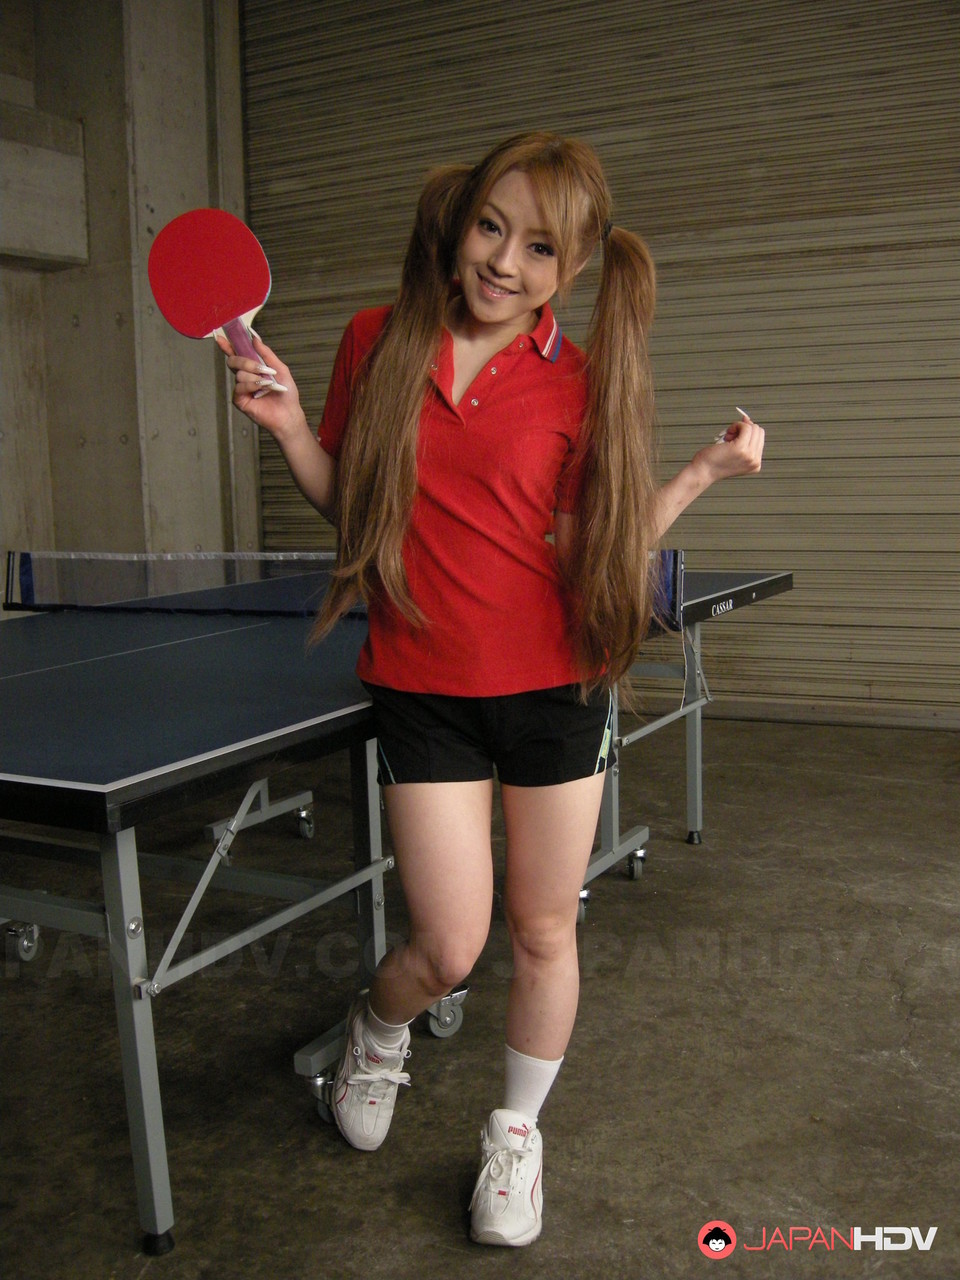 Japanese table tennis player Ria Sakurai gets face fucked by her coach porno fotky #426550941 | Japan HDV Pics, Ria Sakurai, Japanese, mobilní porno